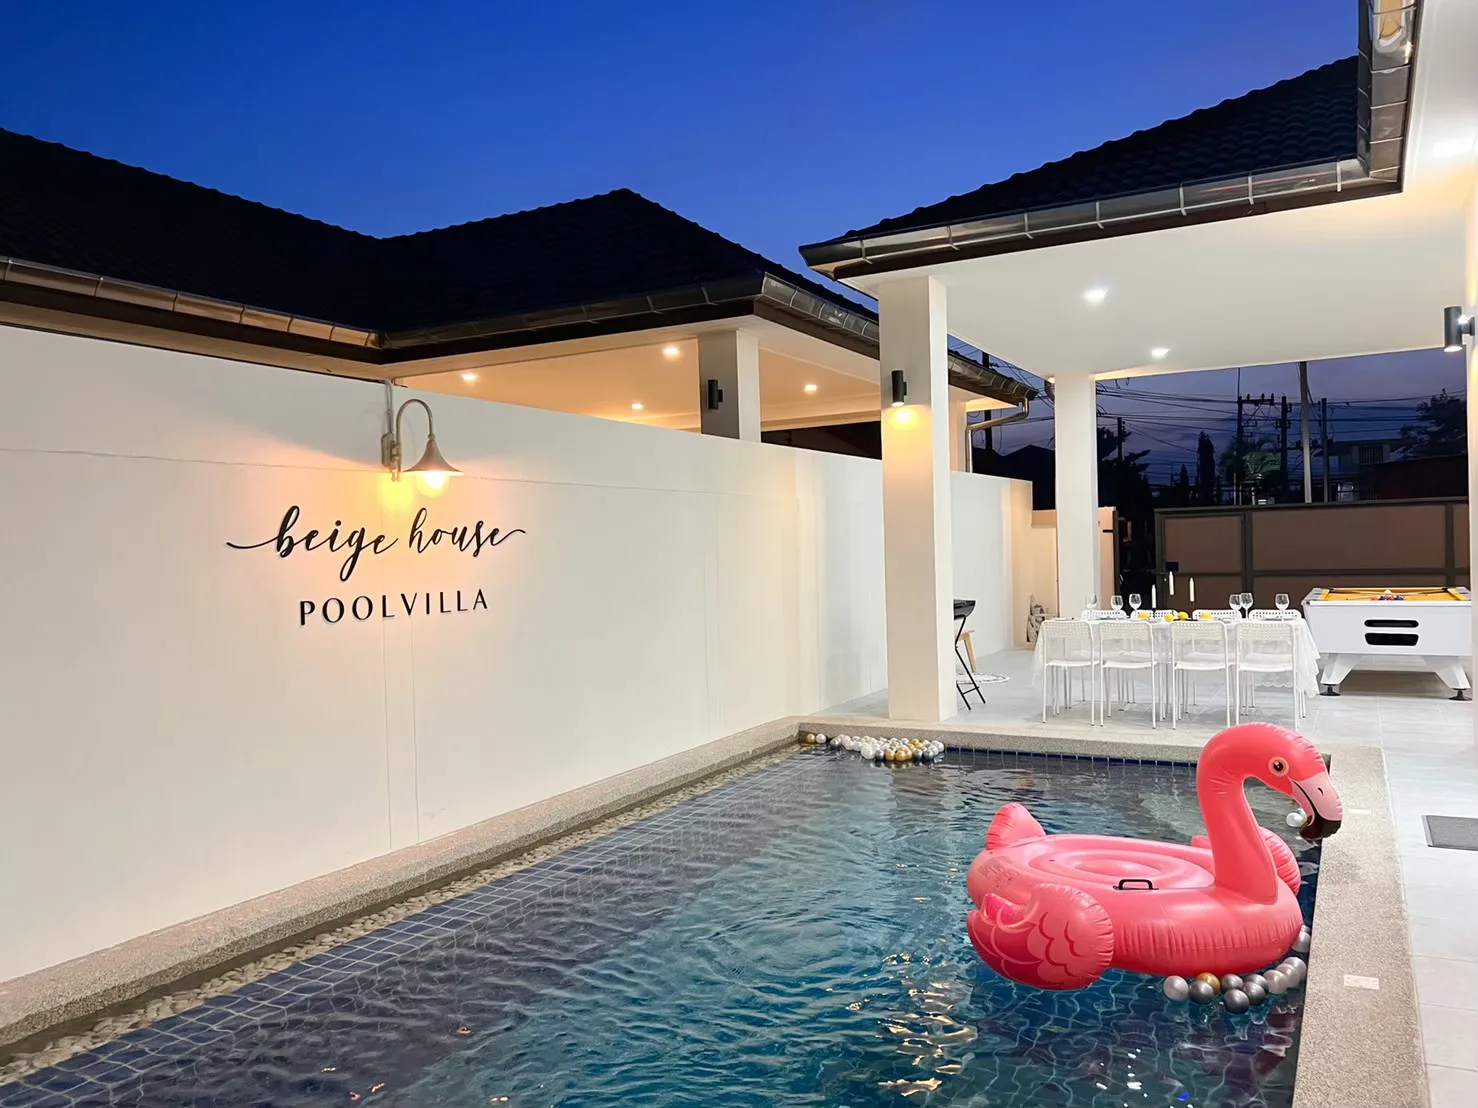 Beige House Poolvilla Pattaya